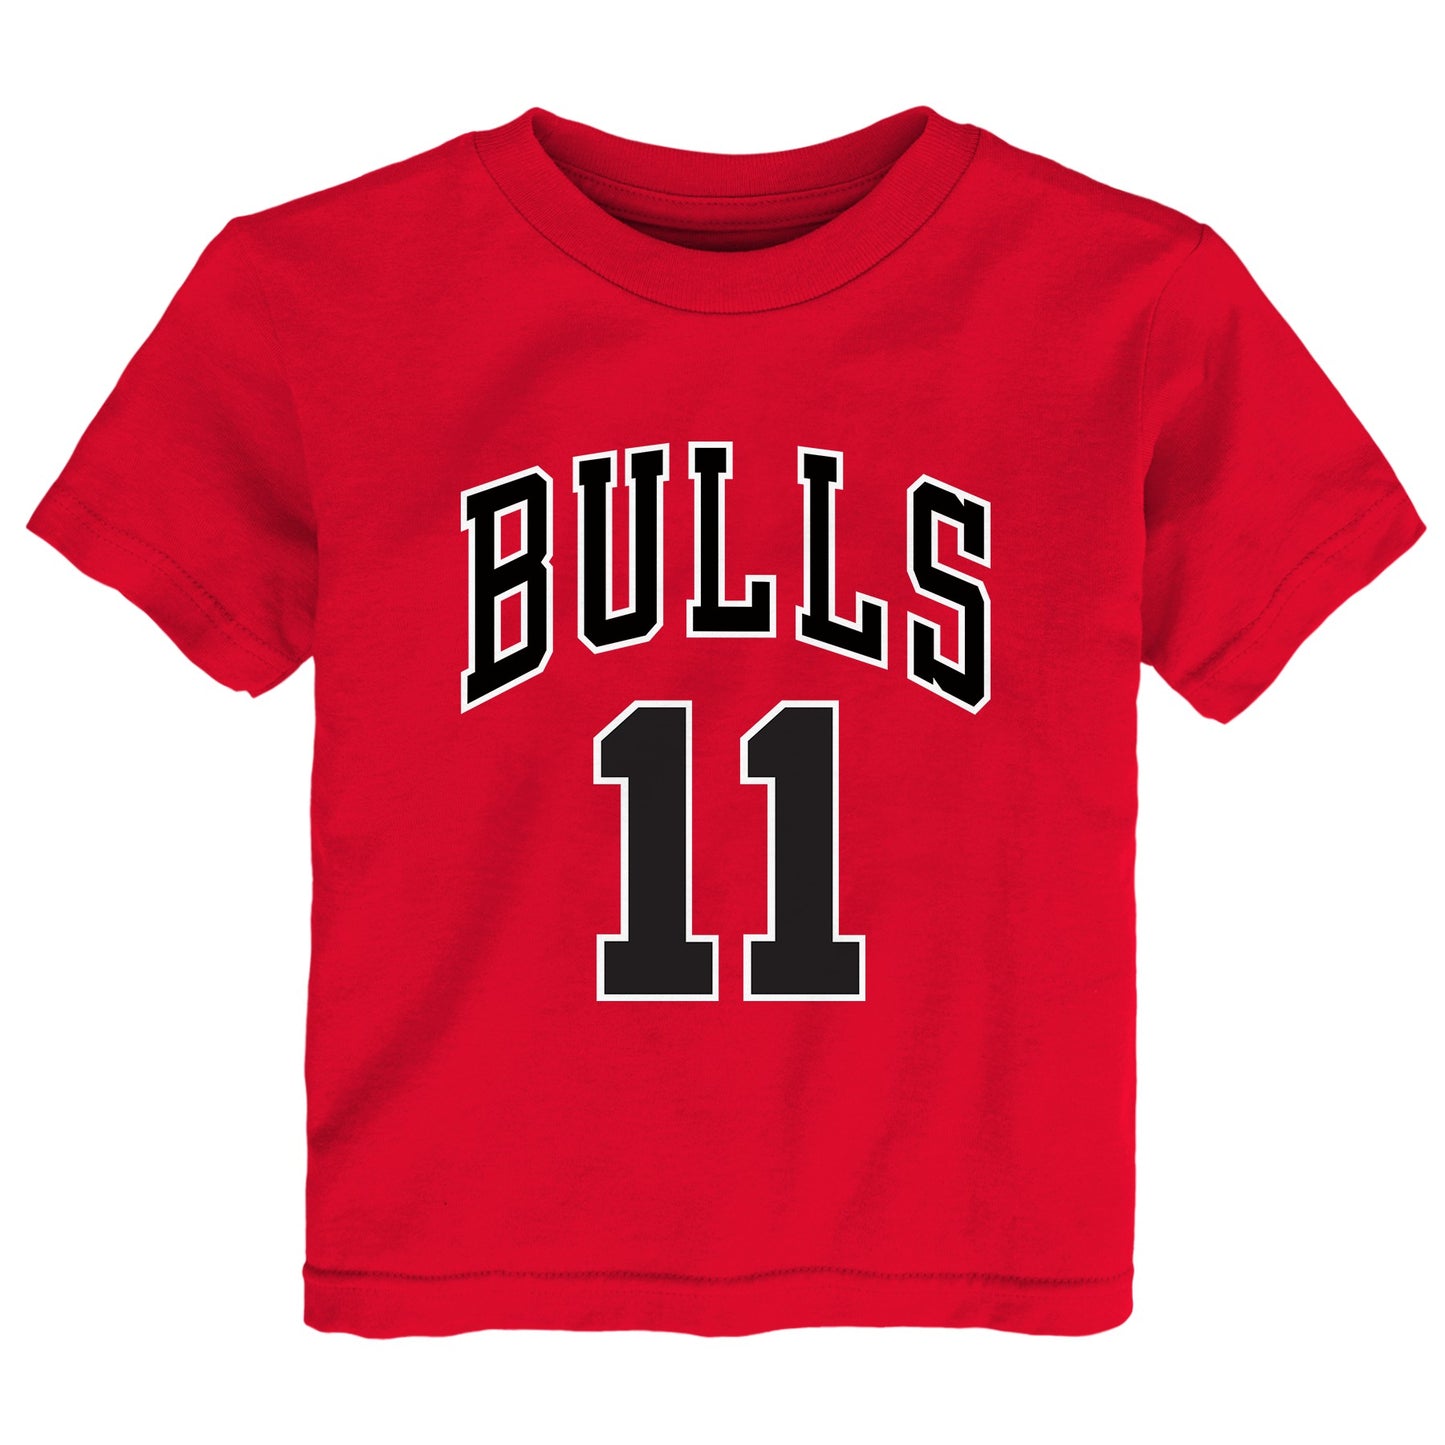 Toddler Demar Derozan Red Chicago Bulls Name & Number T-Shirt